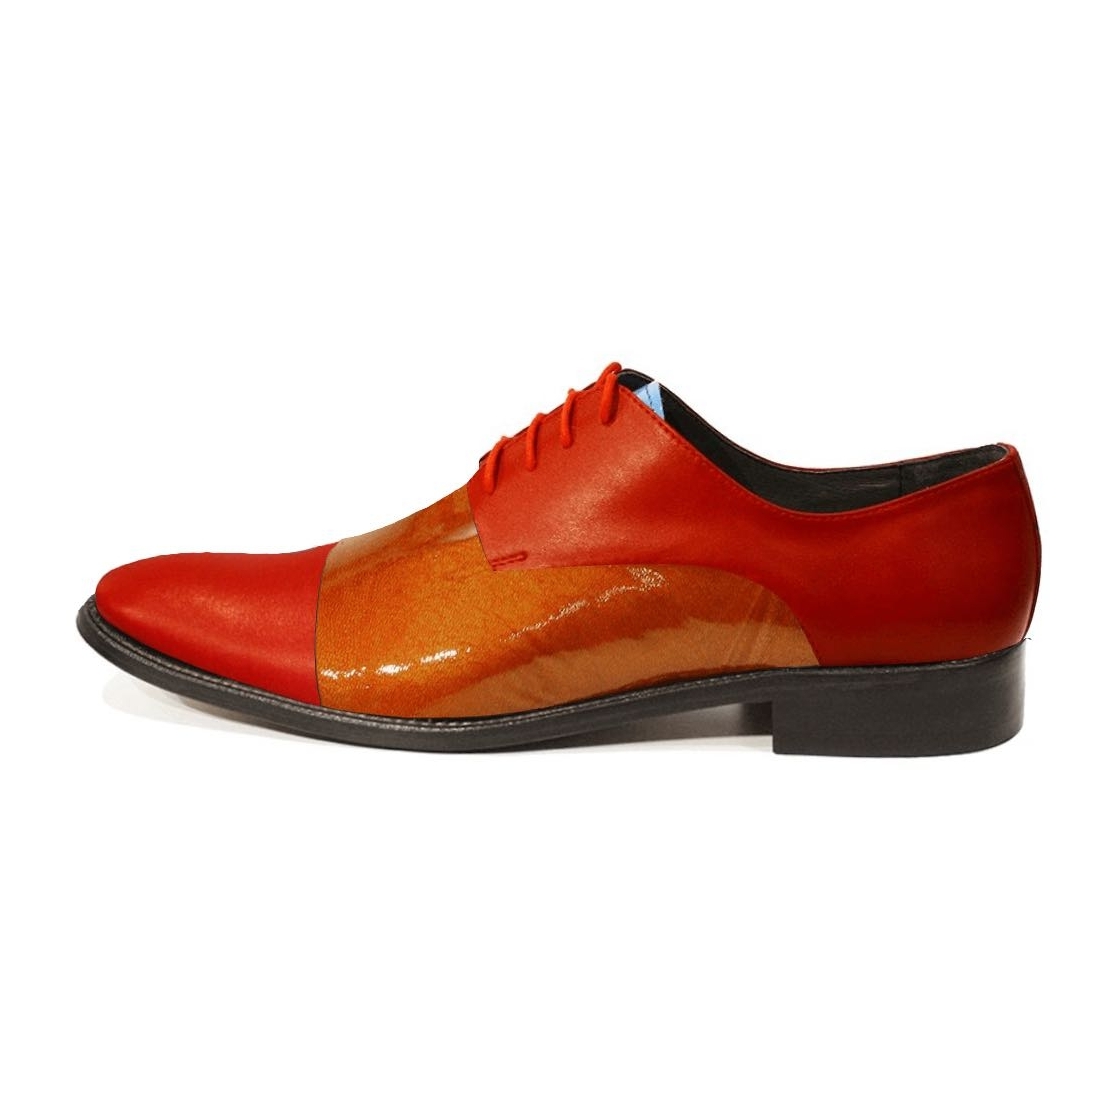 Modello Teterro - Классическая обувь - Handmade Colorful Italian Leather Shoes